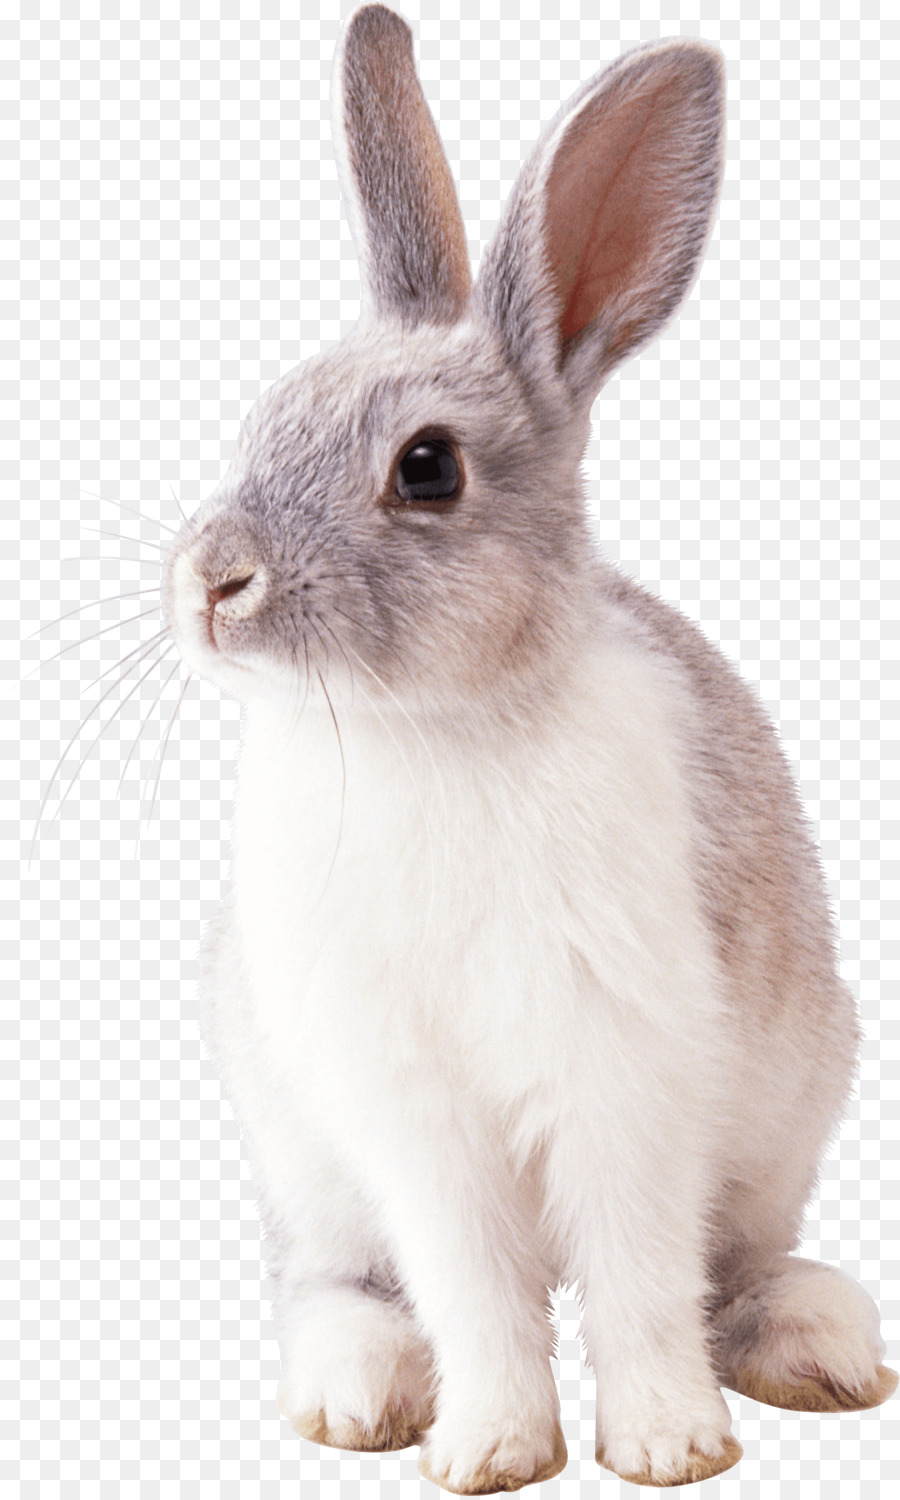 Cottontail rabbit Easter Bunny Clip art - rabit png download - 1529*2542 - Free Transparent Rabbit png Download.